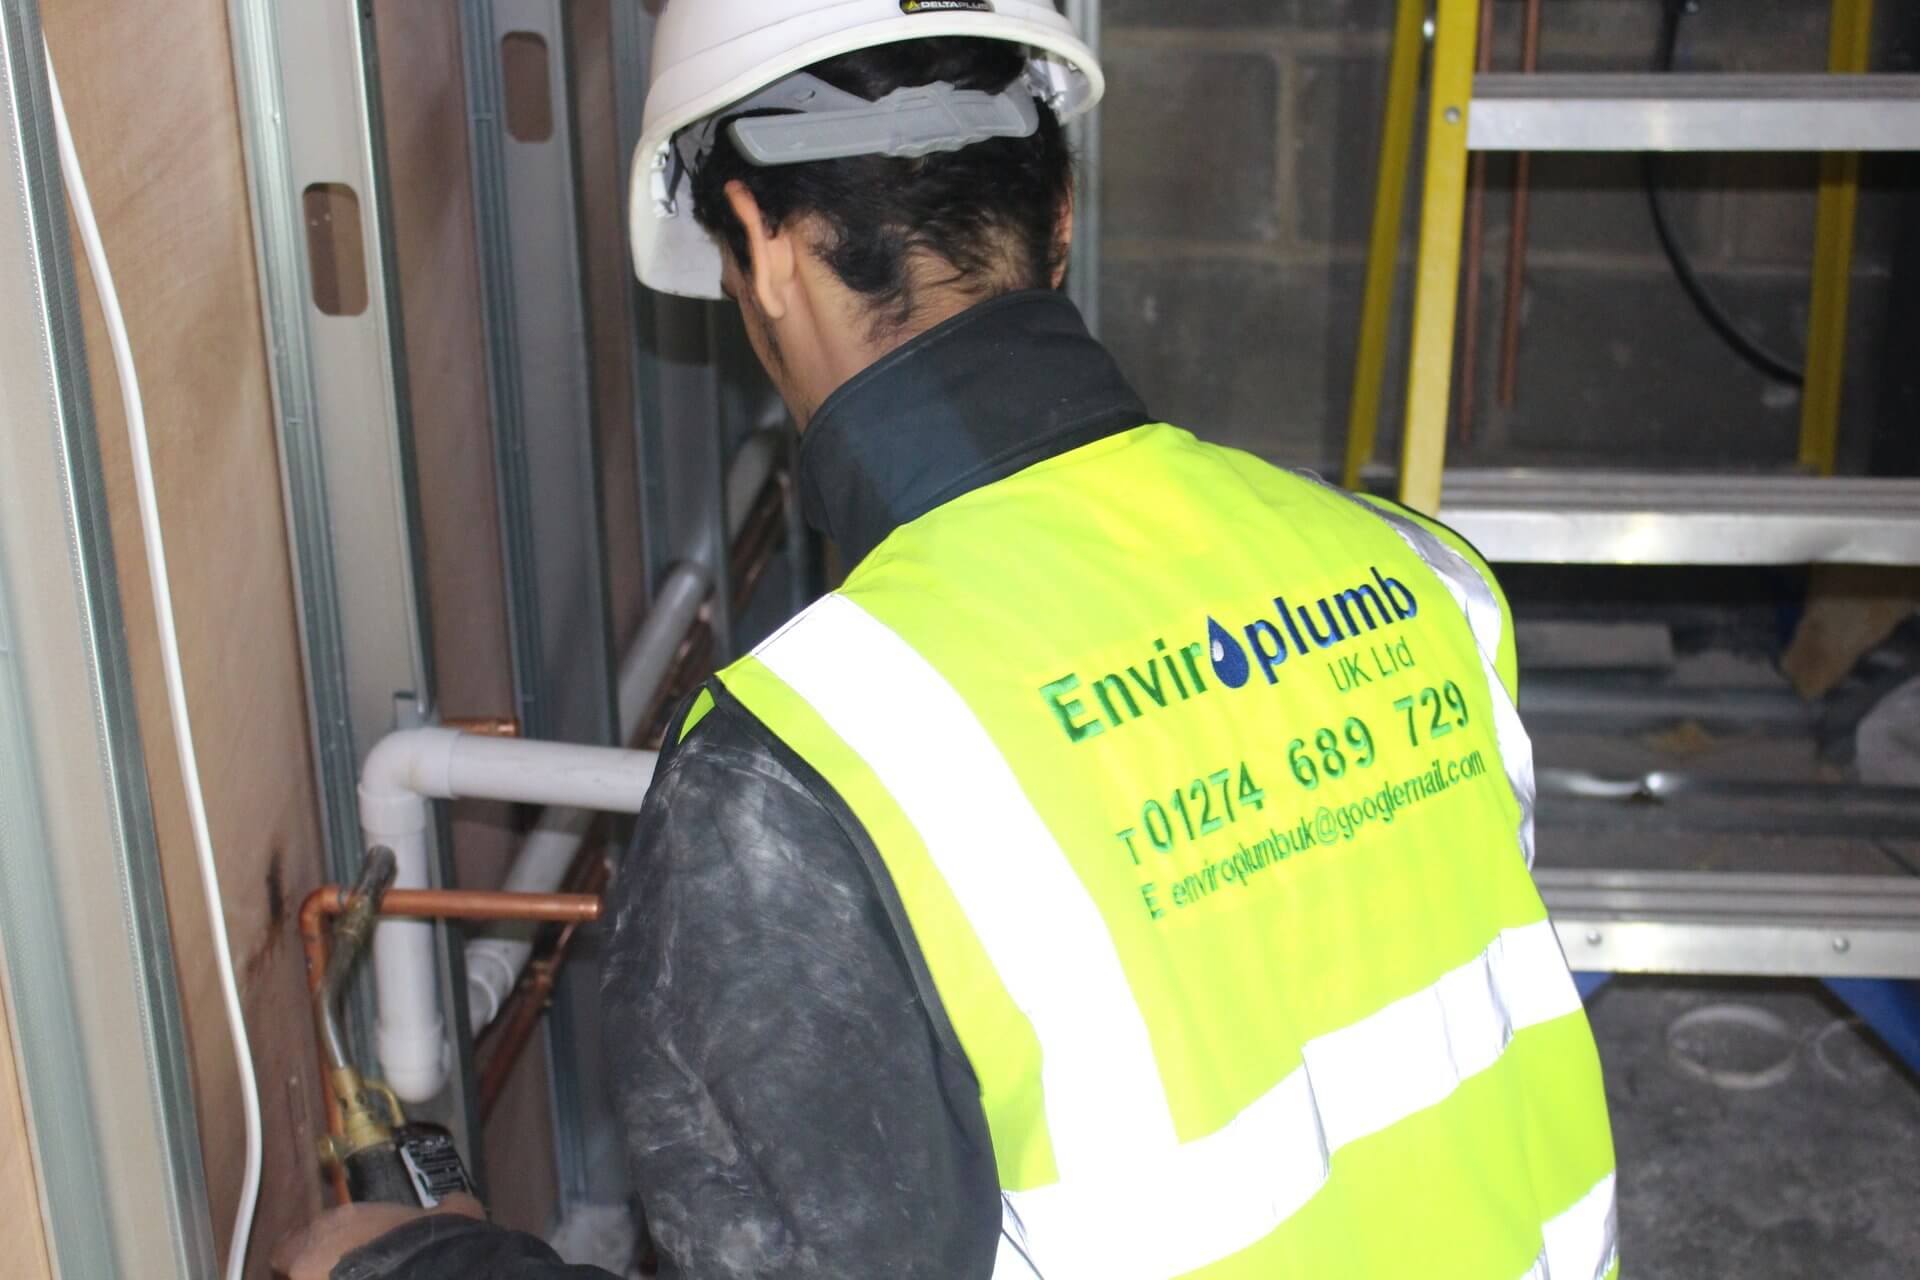 Enviroplumb UK Ltd plumber